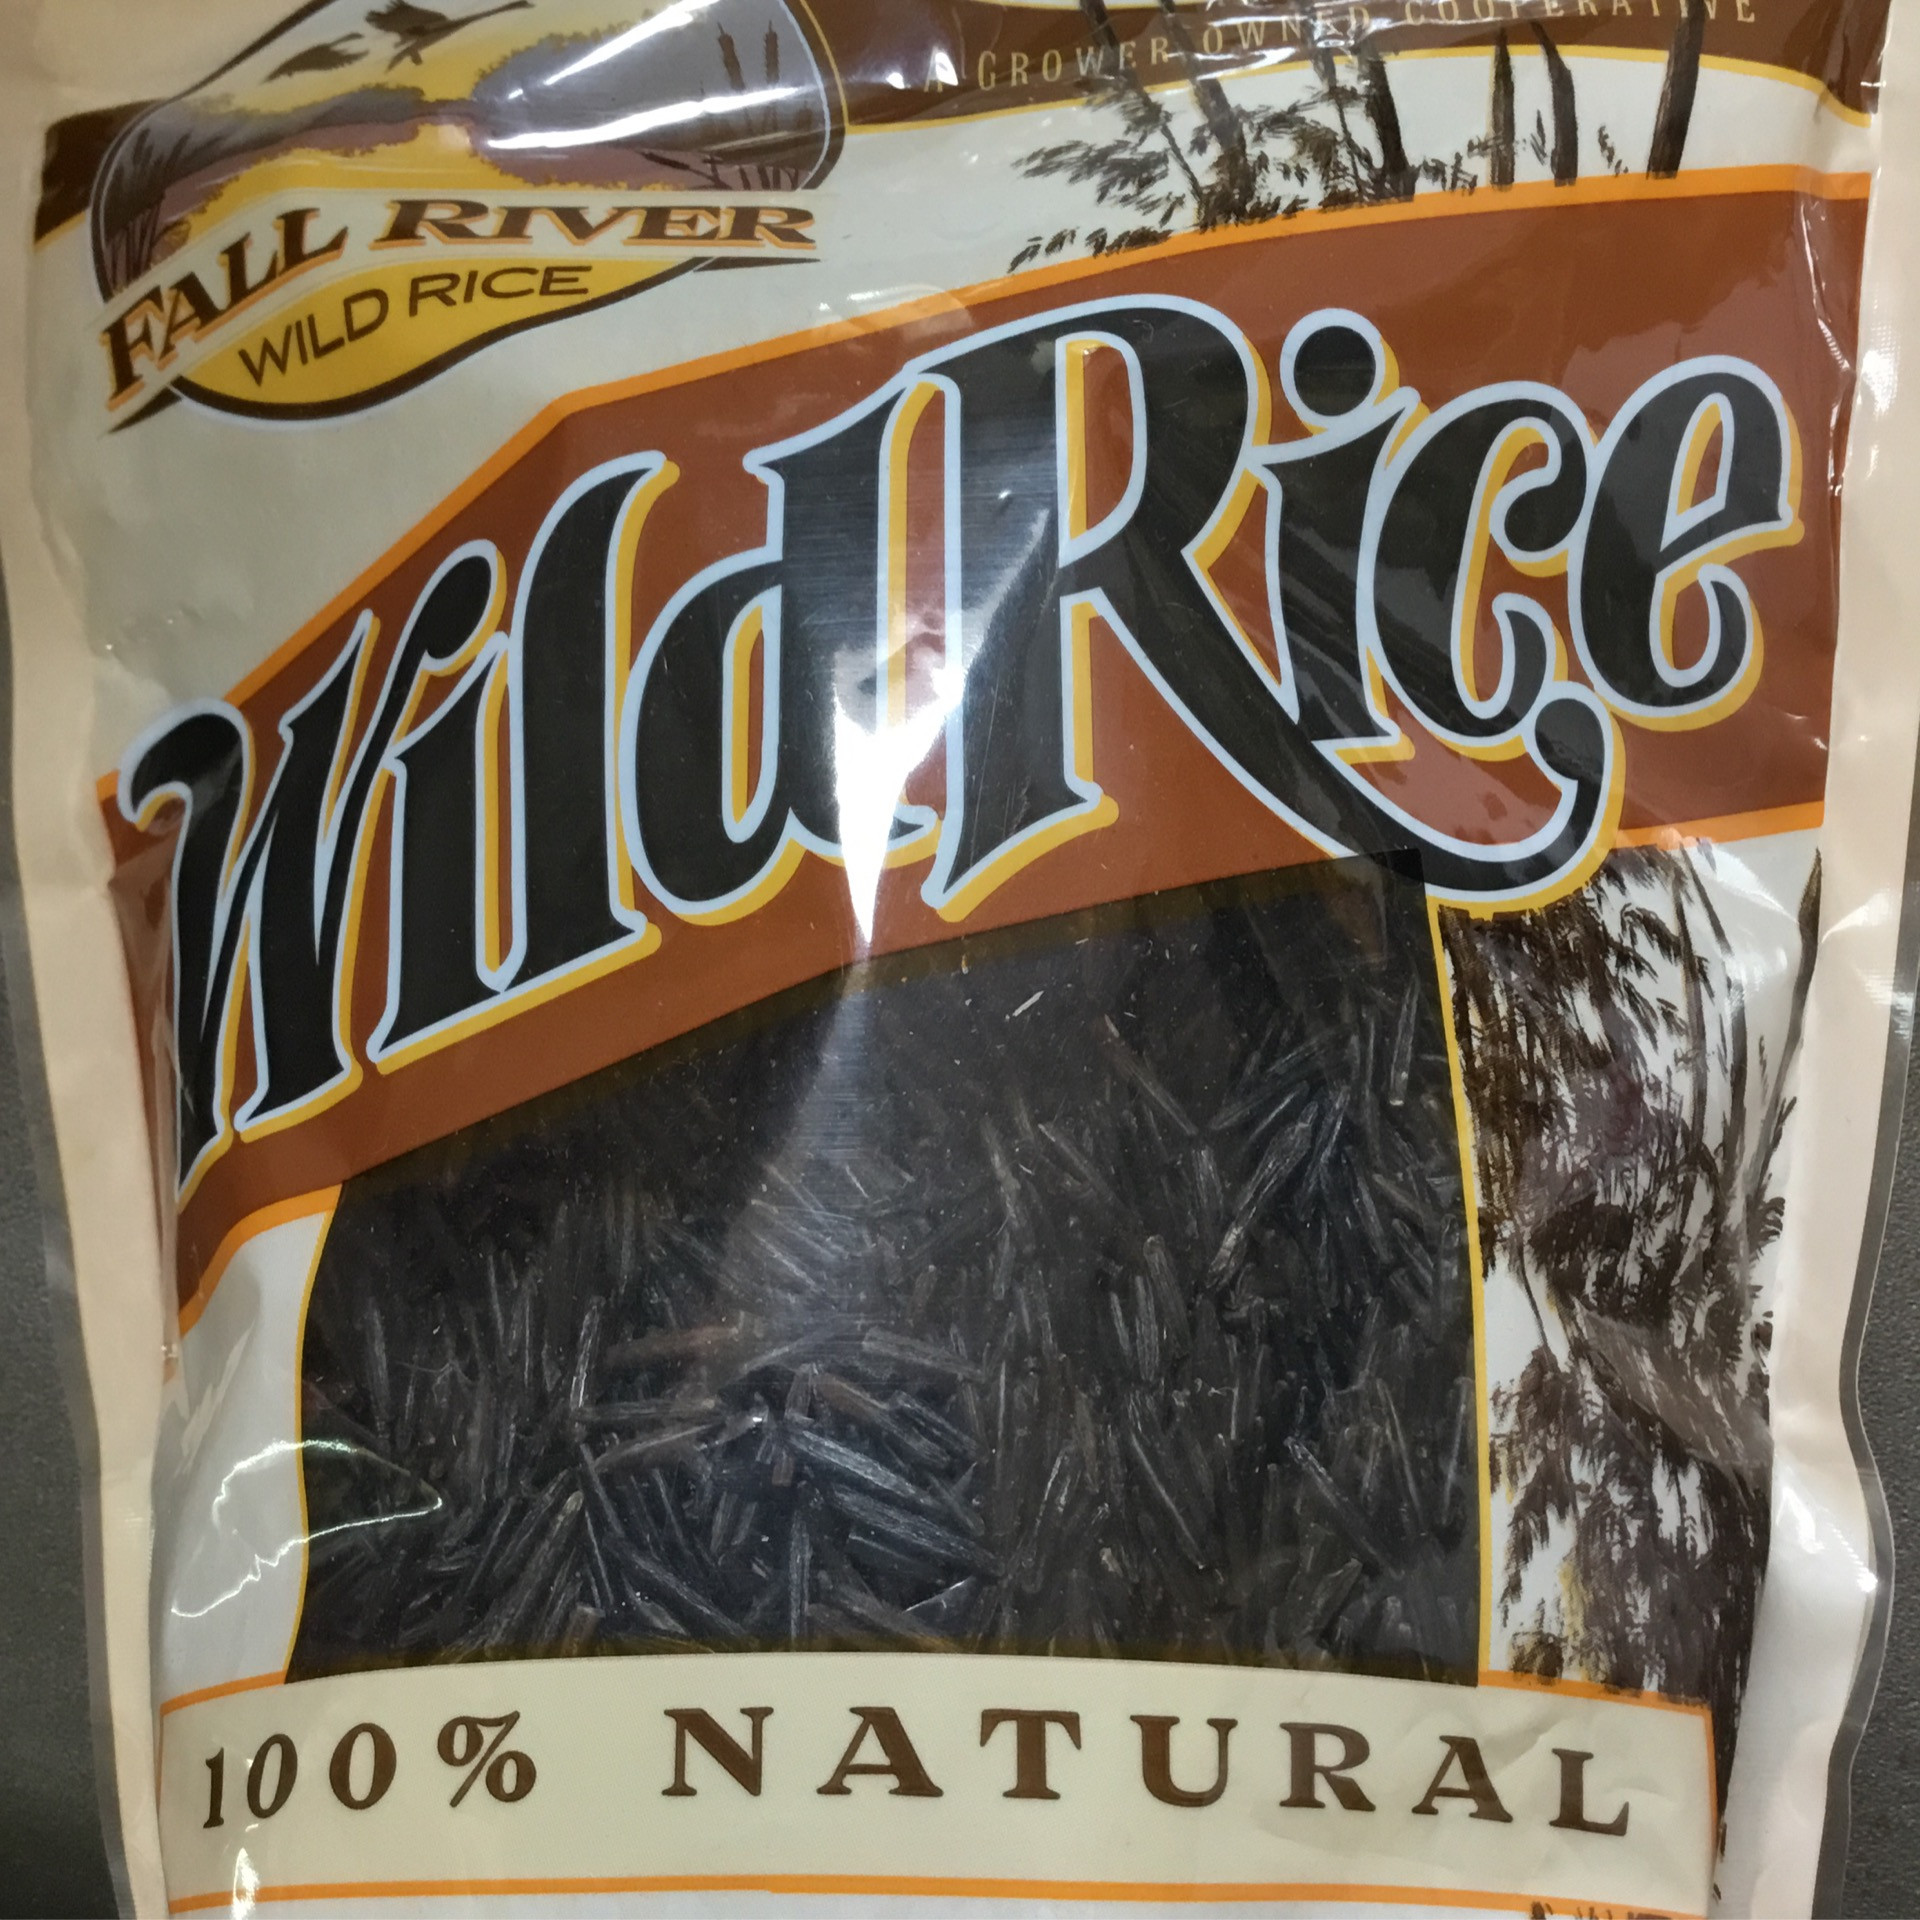 Fall River Wild Rice
 Fall River Wild Rice 1 pound